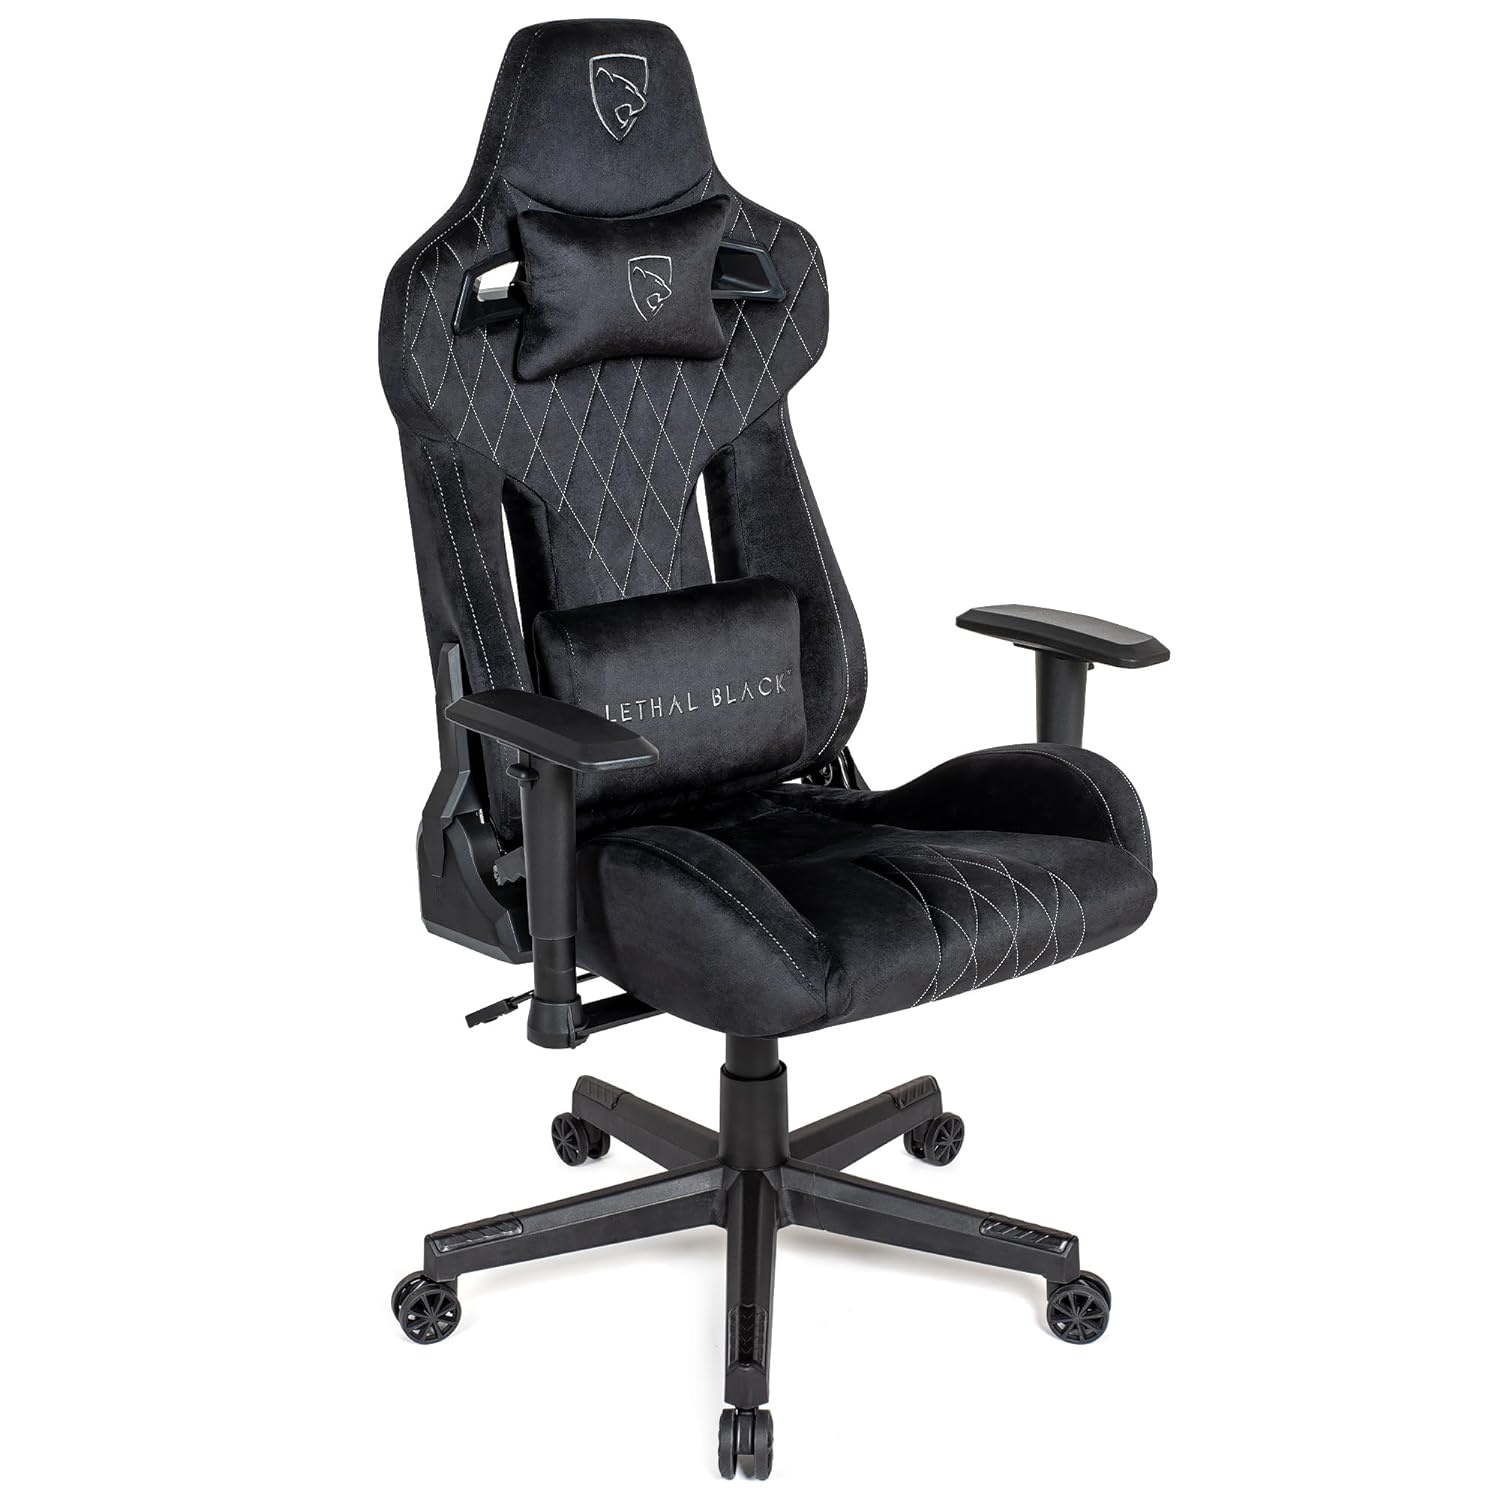 Lethal Black Ergonomic Gaming Chair 